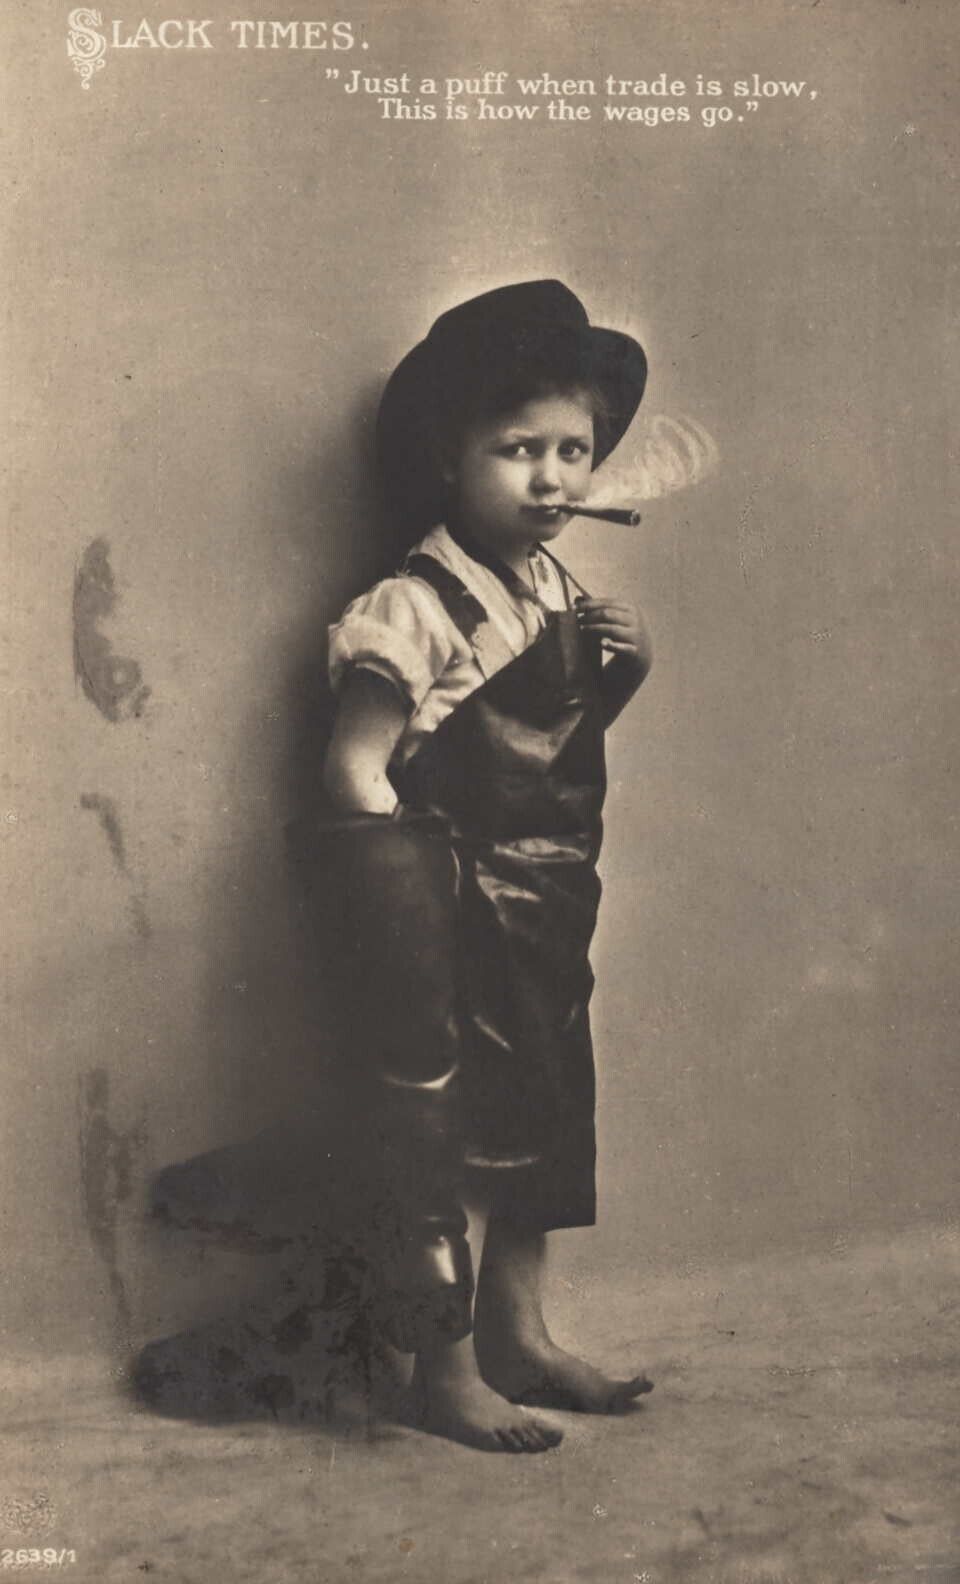 Barefoot Working Young Boy on Smoking Break Slack Times Vintage 1917 Postcard